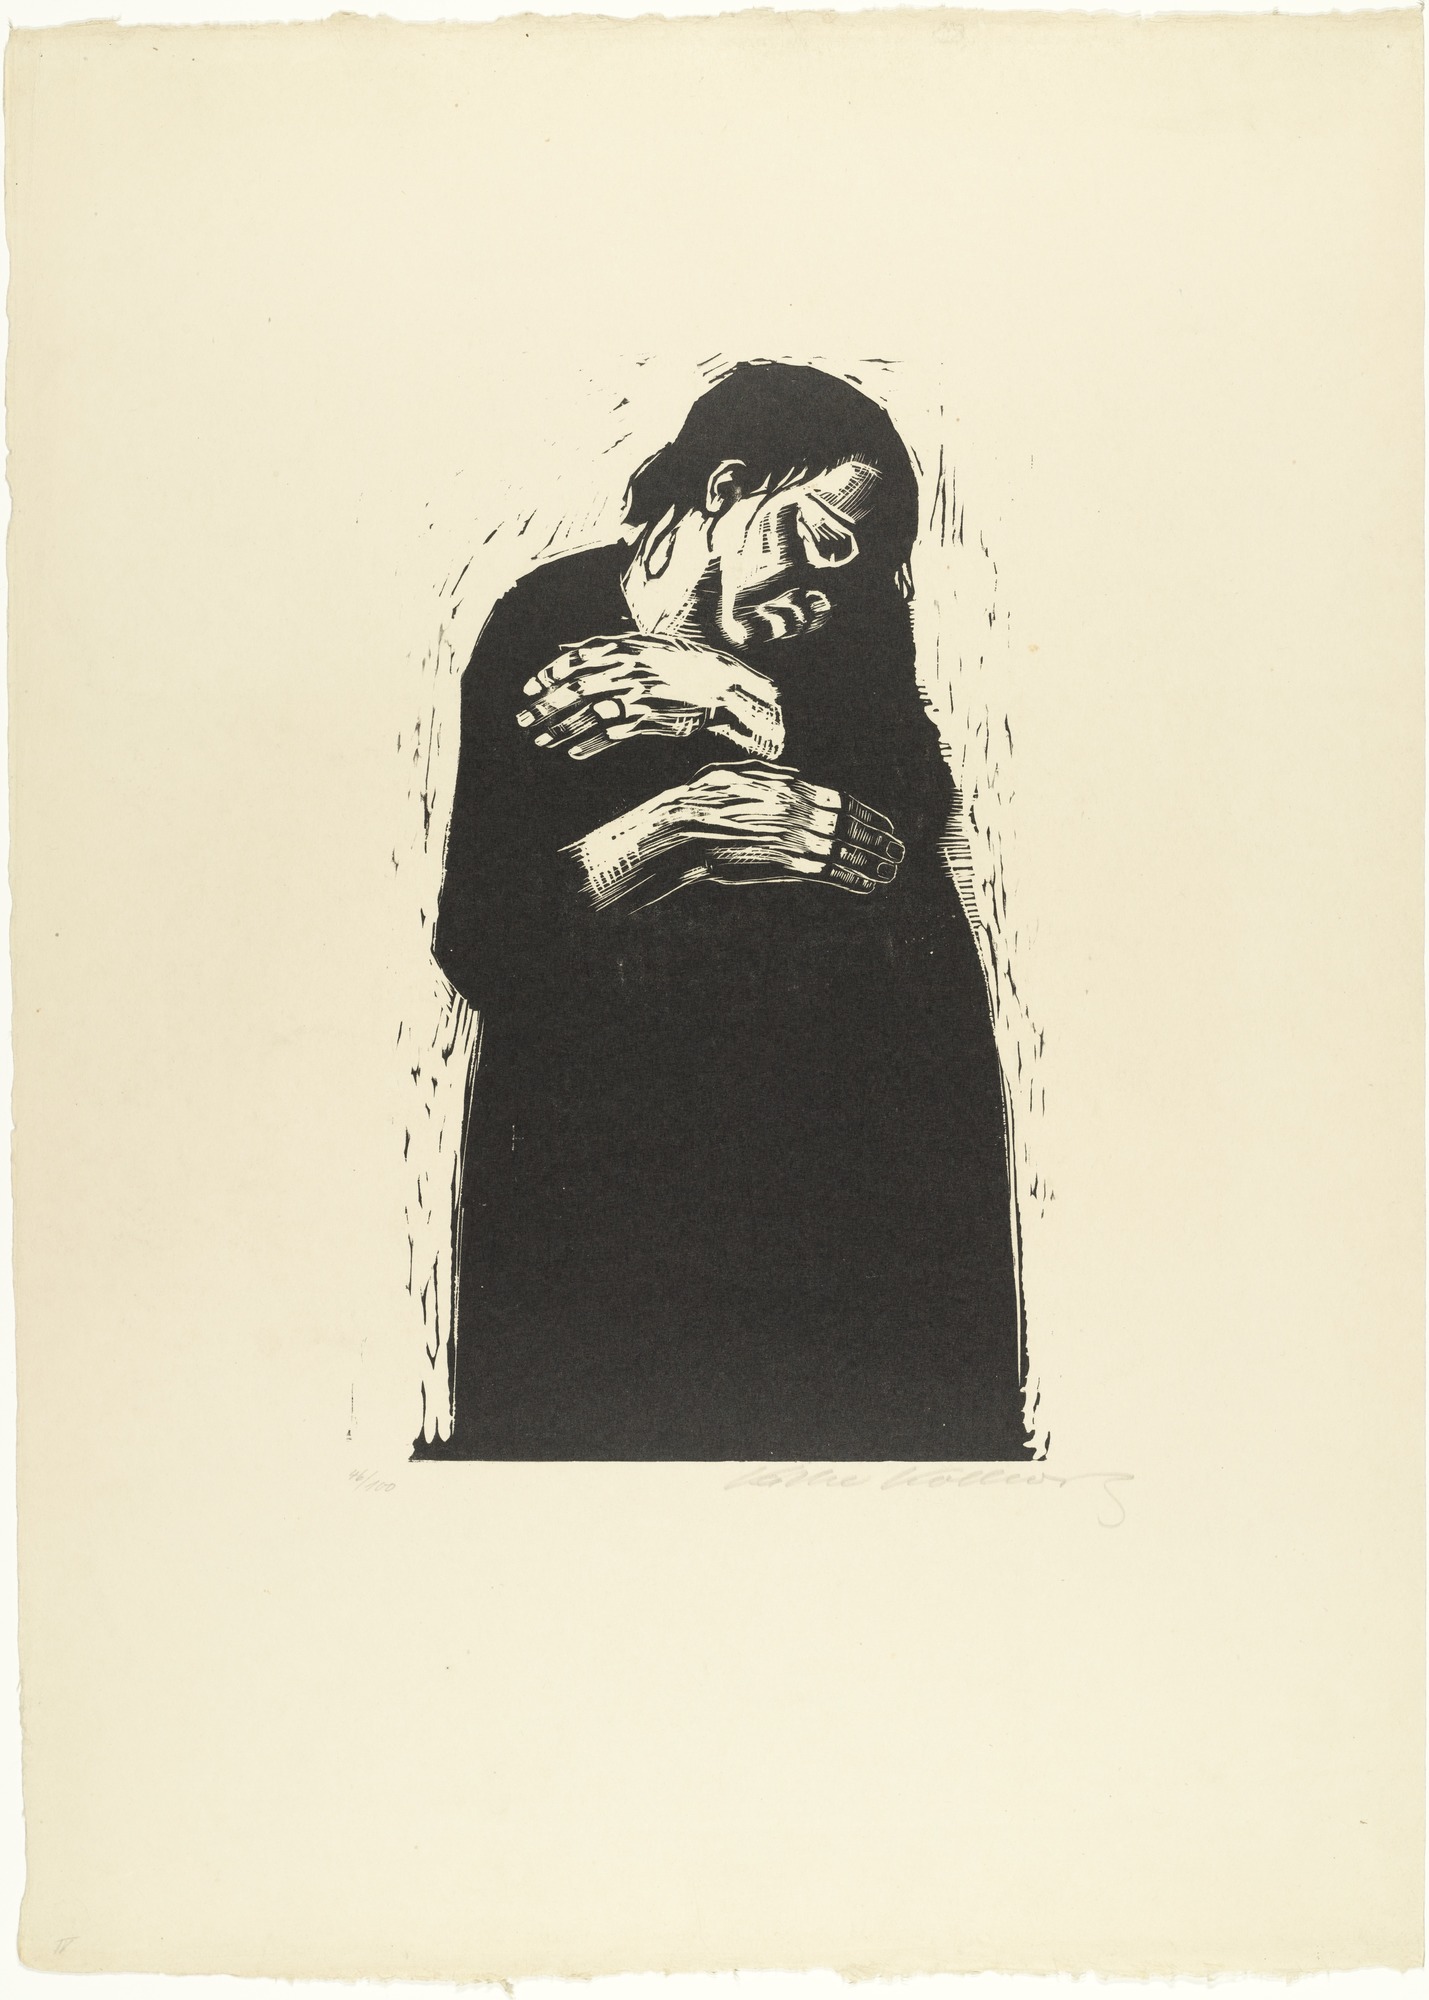 ВДОВА І by Käthe Kollwitz - 1921–22 - 370 × 240 mm 